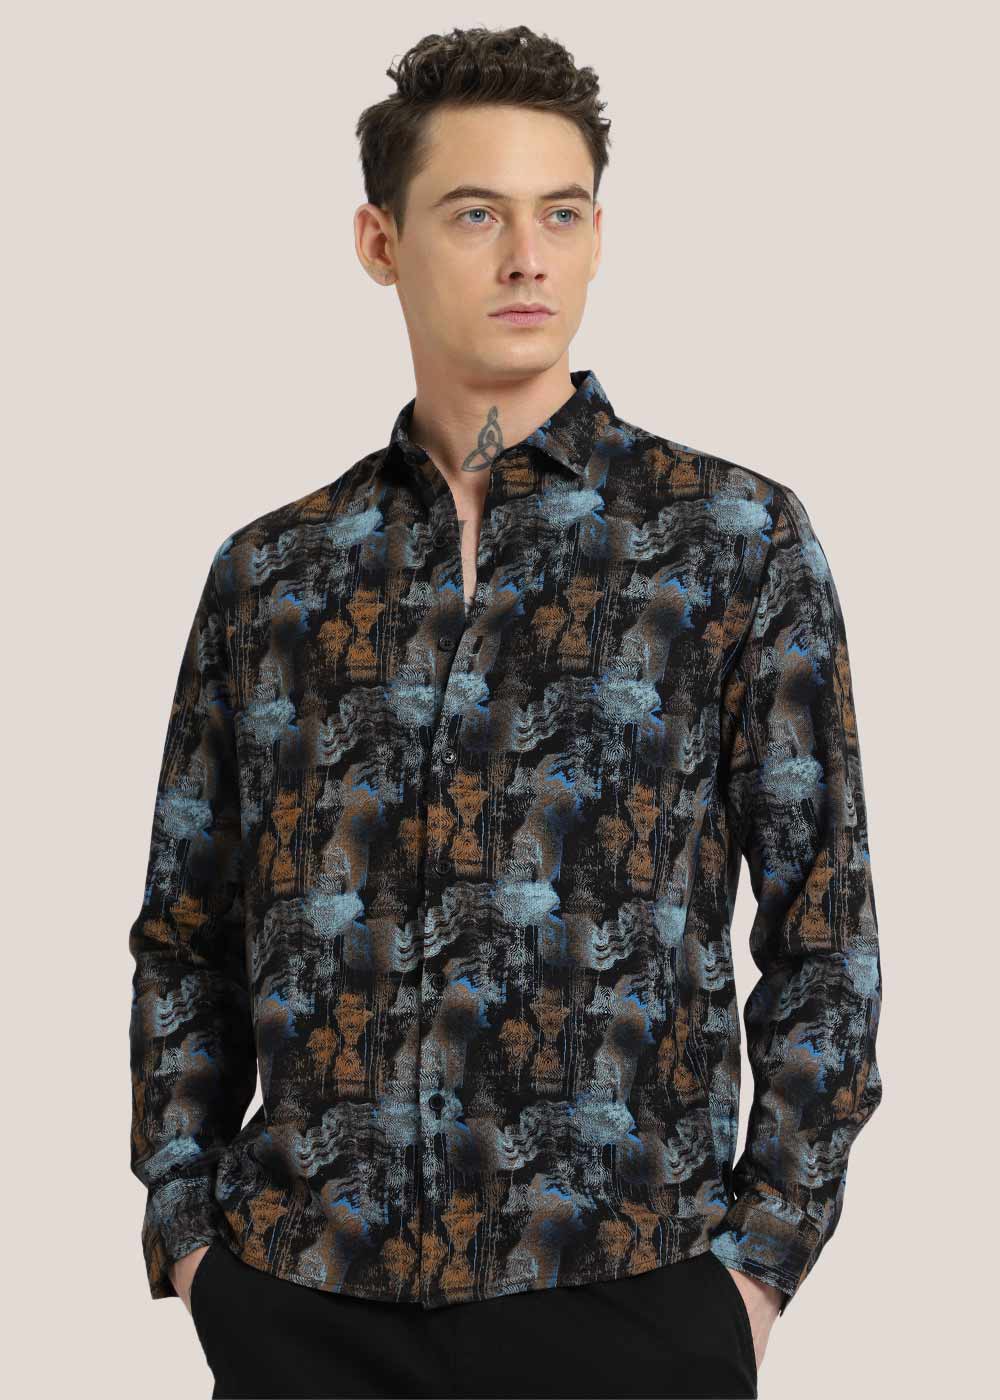 Geometric Textured Printed shirt